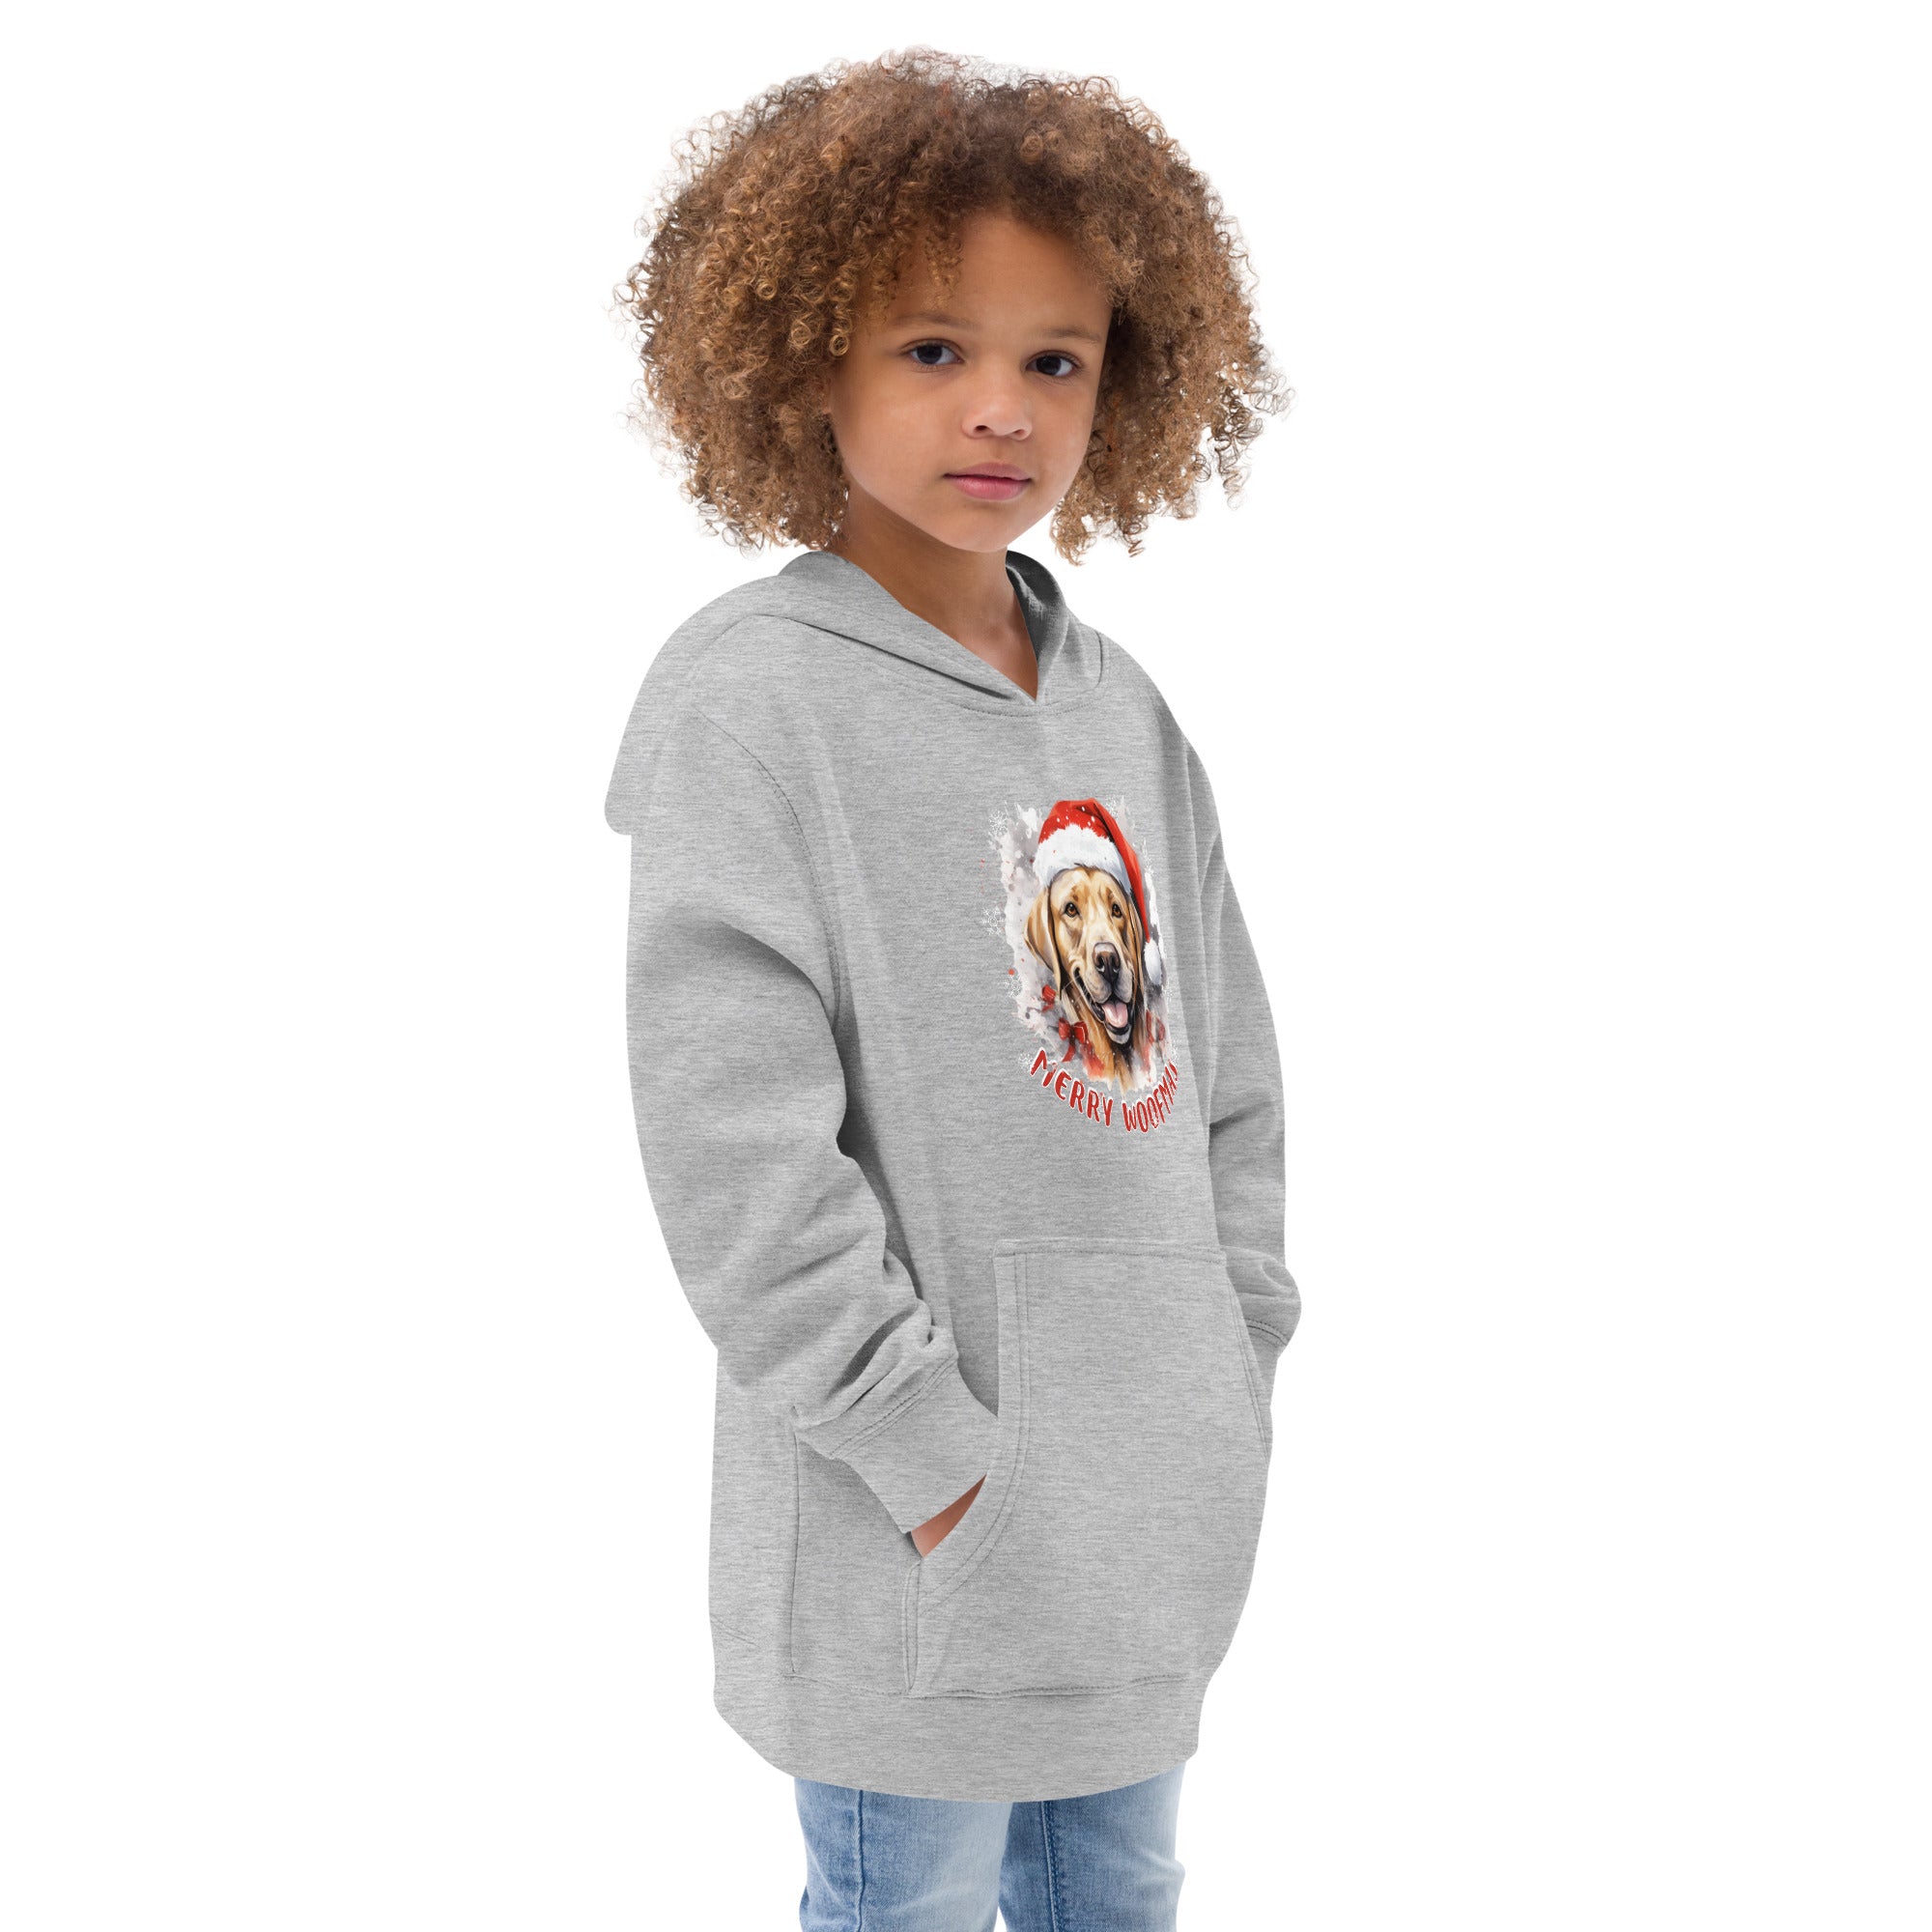 Kids fleece hoodie Labrador - Merry Woofmas